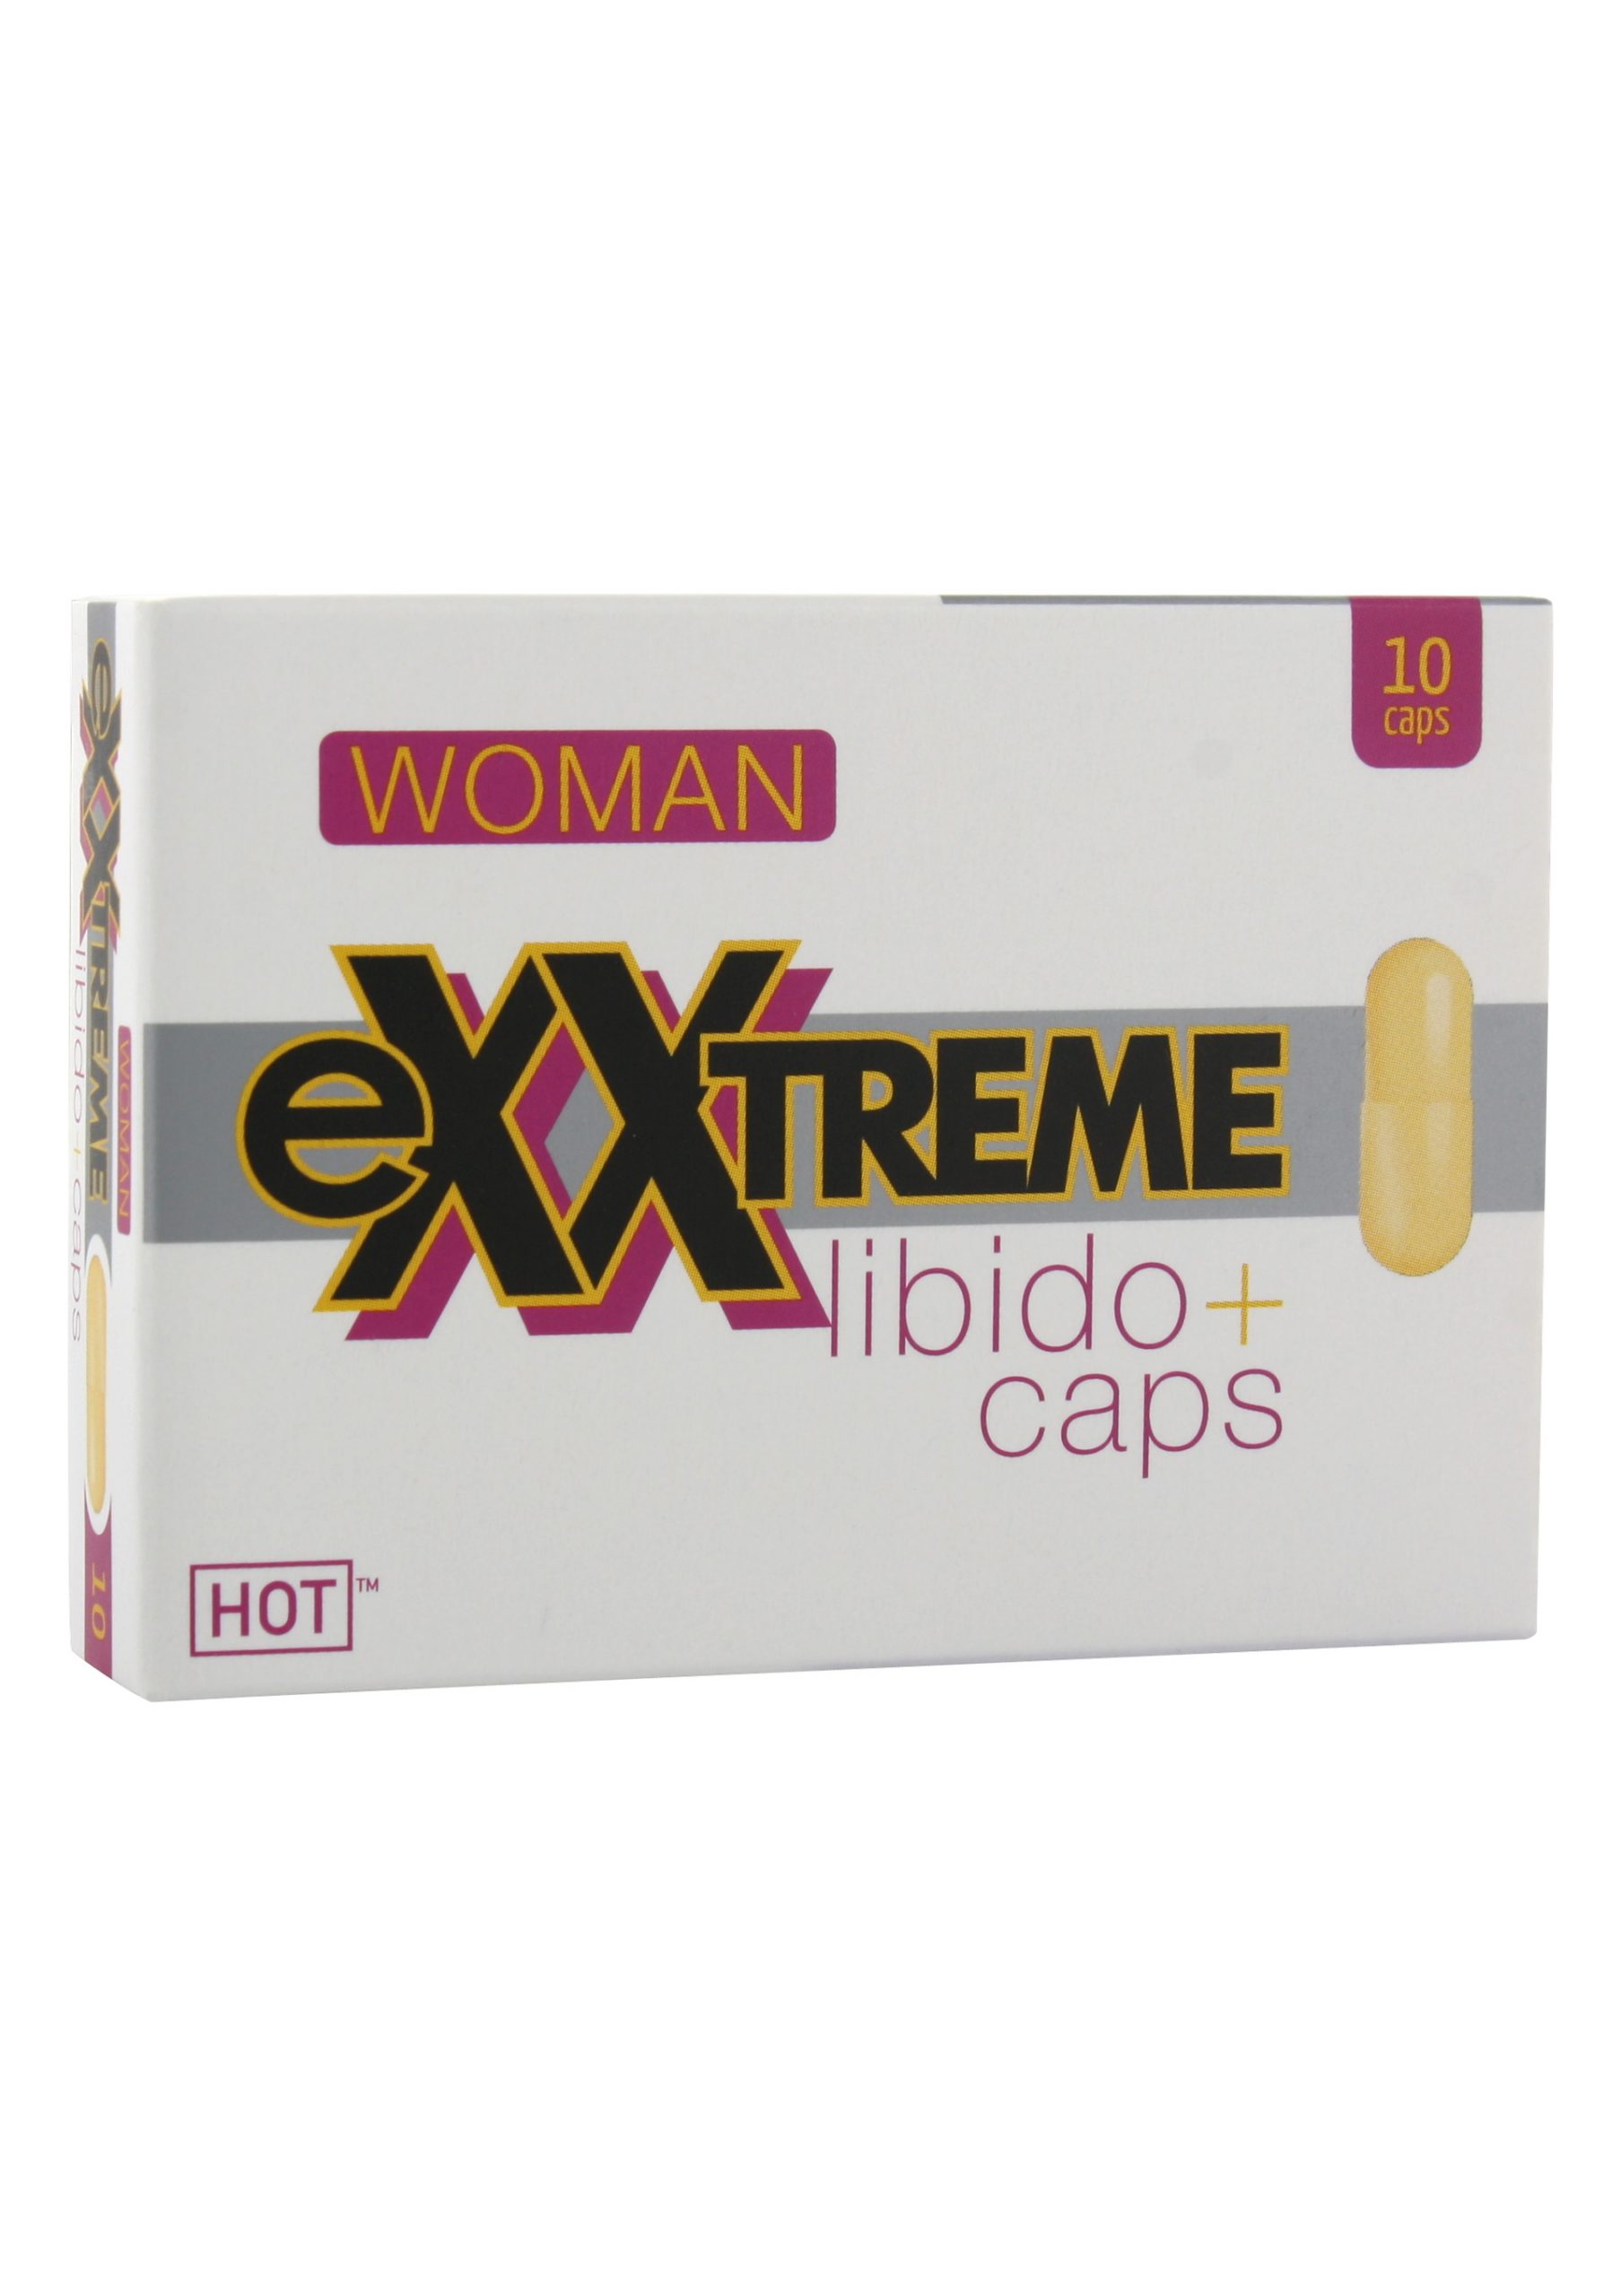 Exxtreme Libido+ Woman 10 stuks